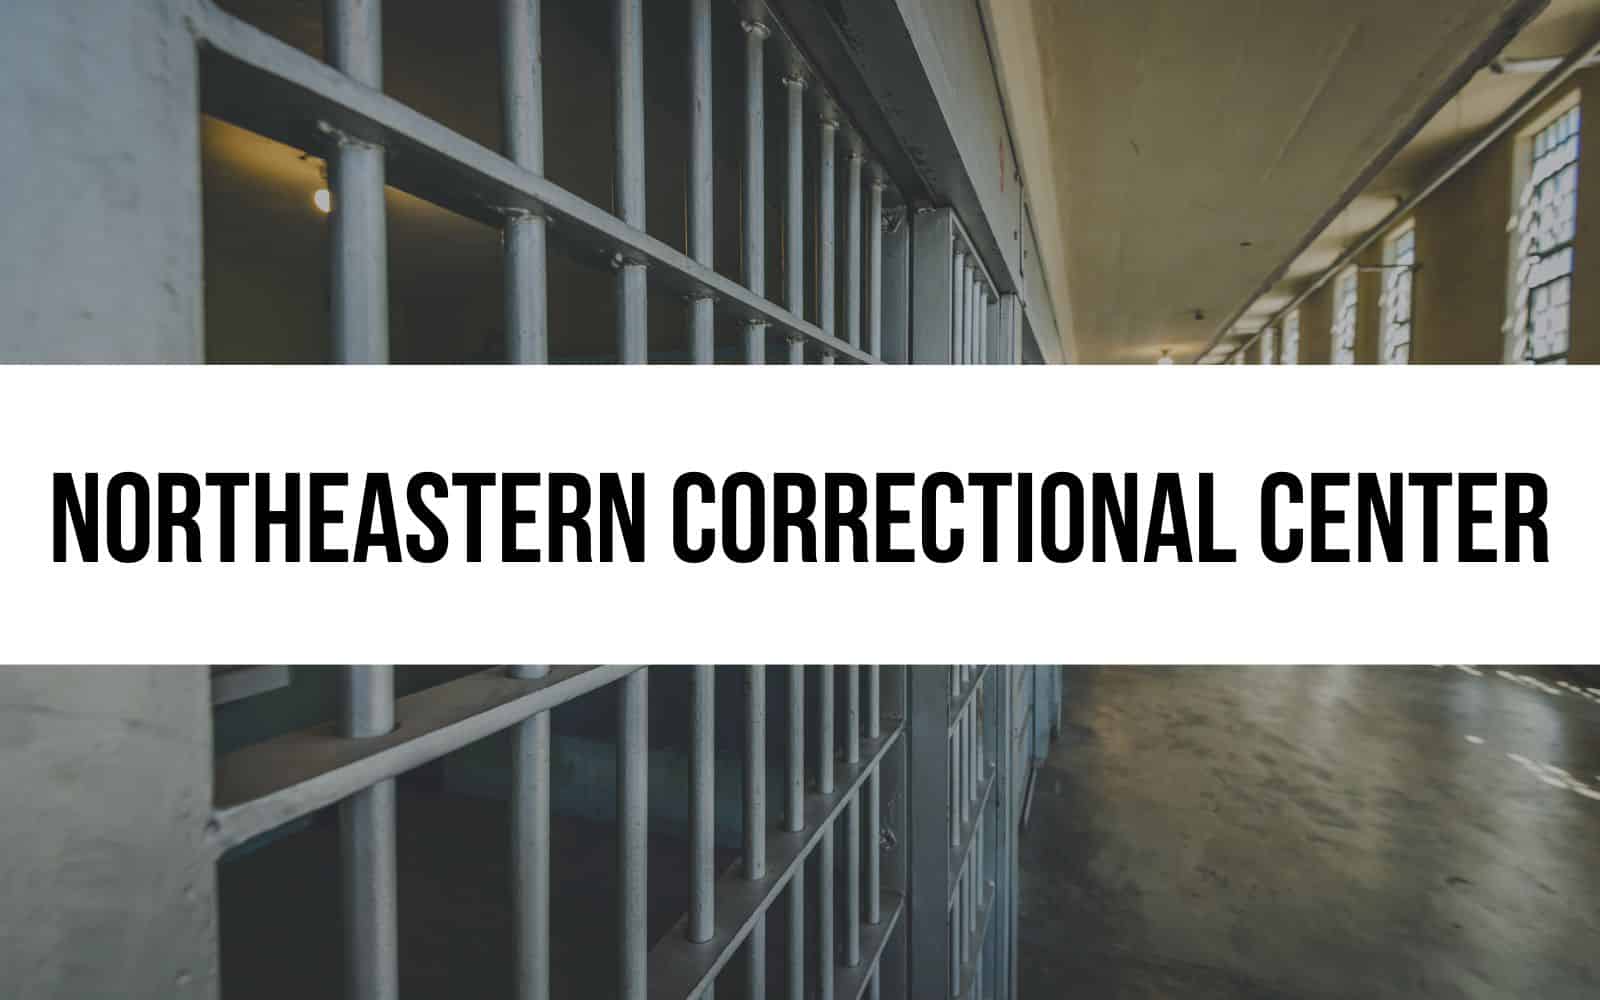 Northeastern Correctional Center